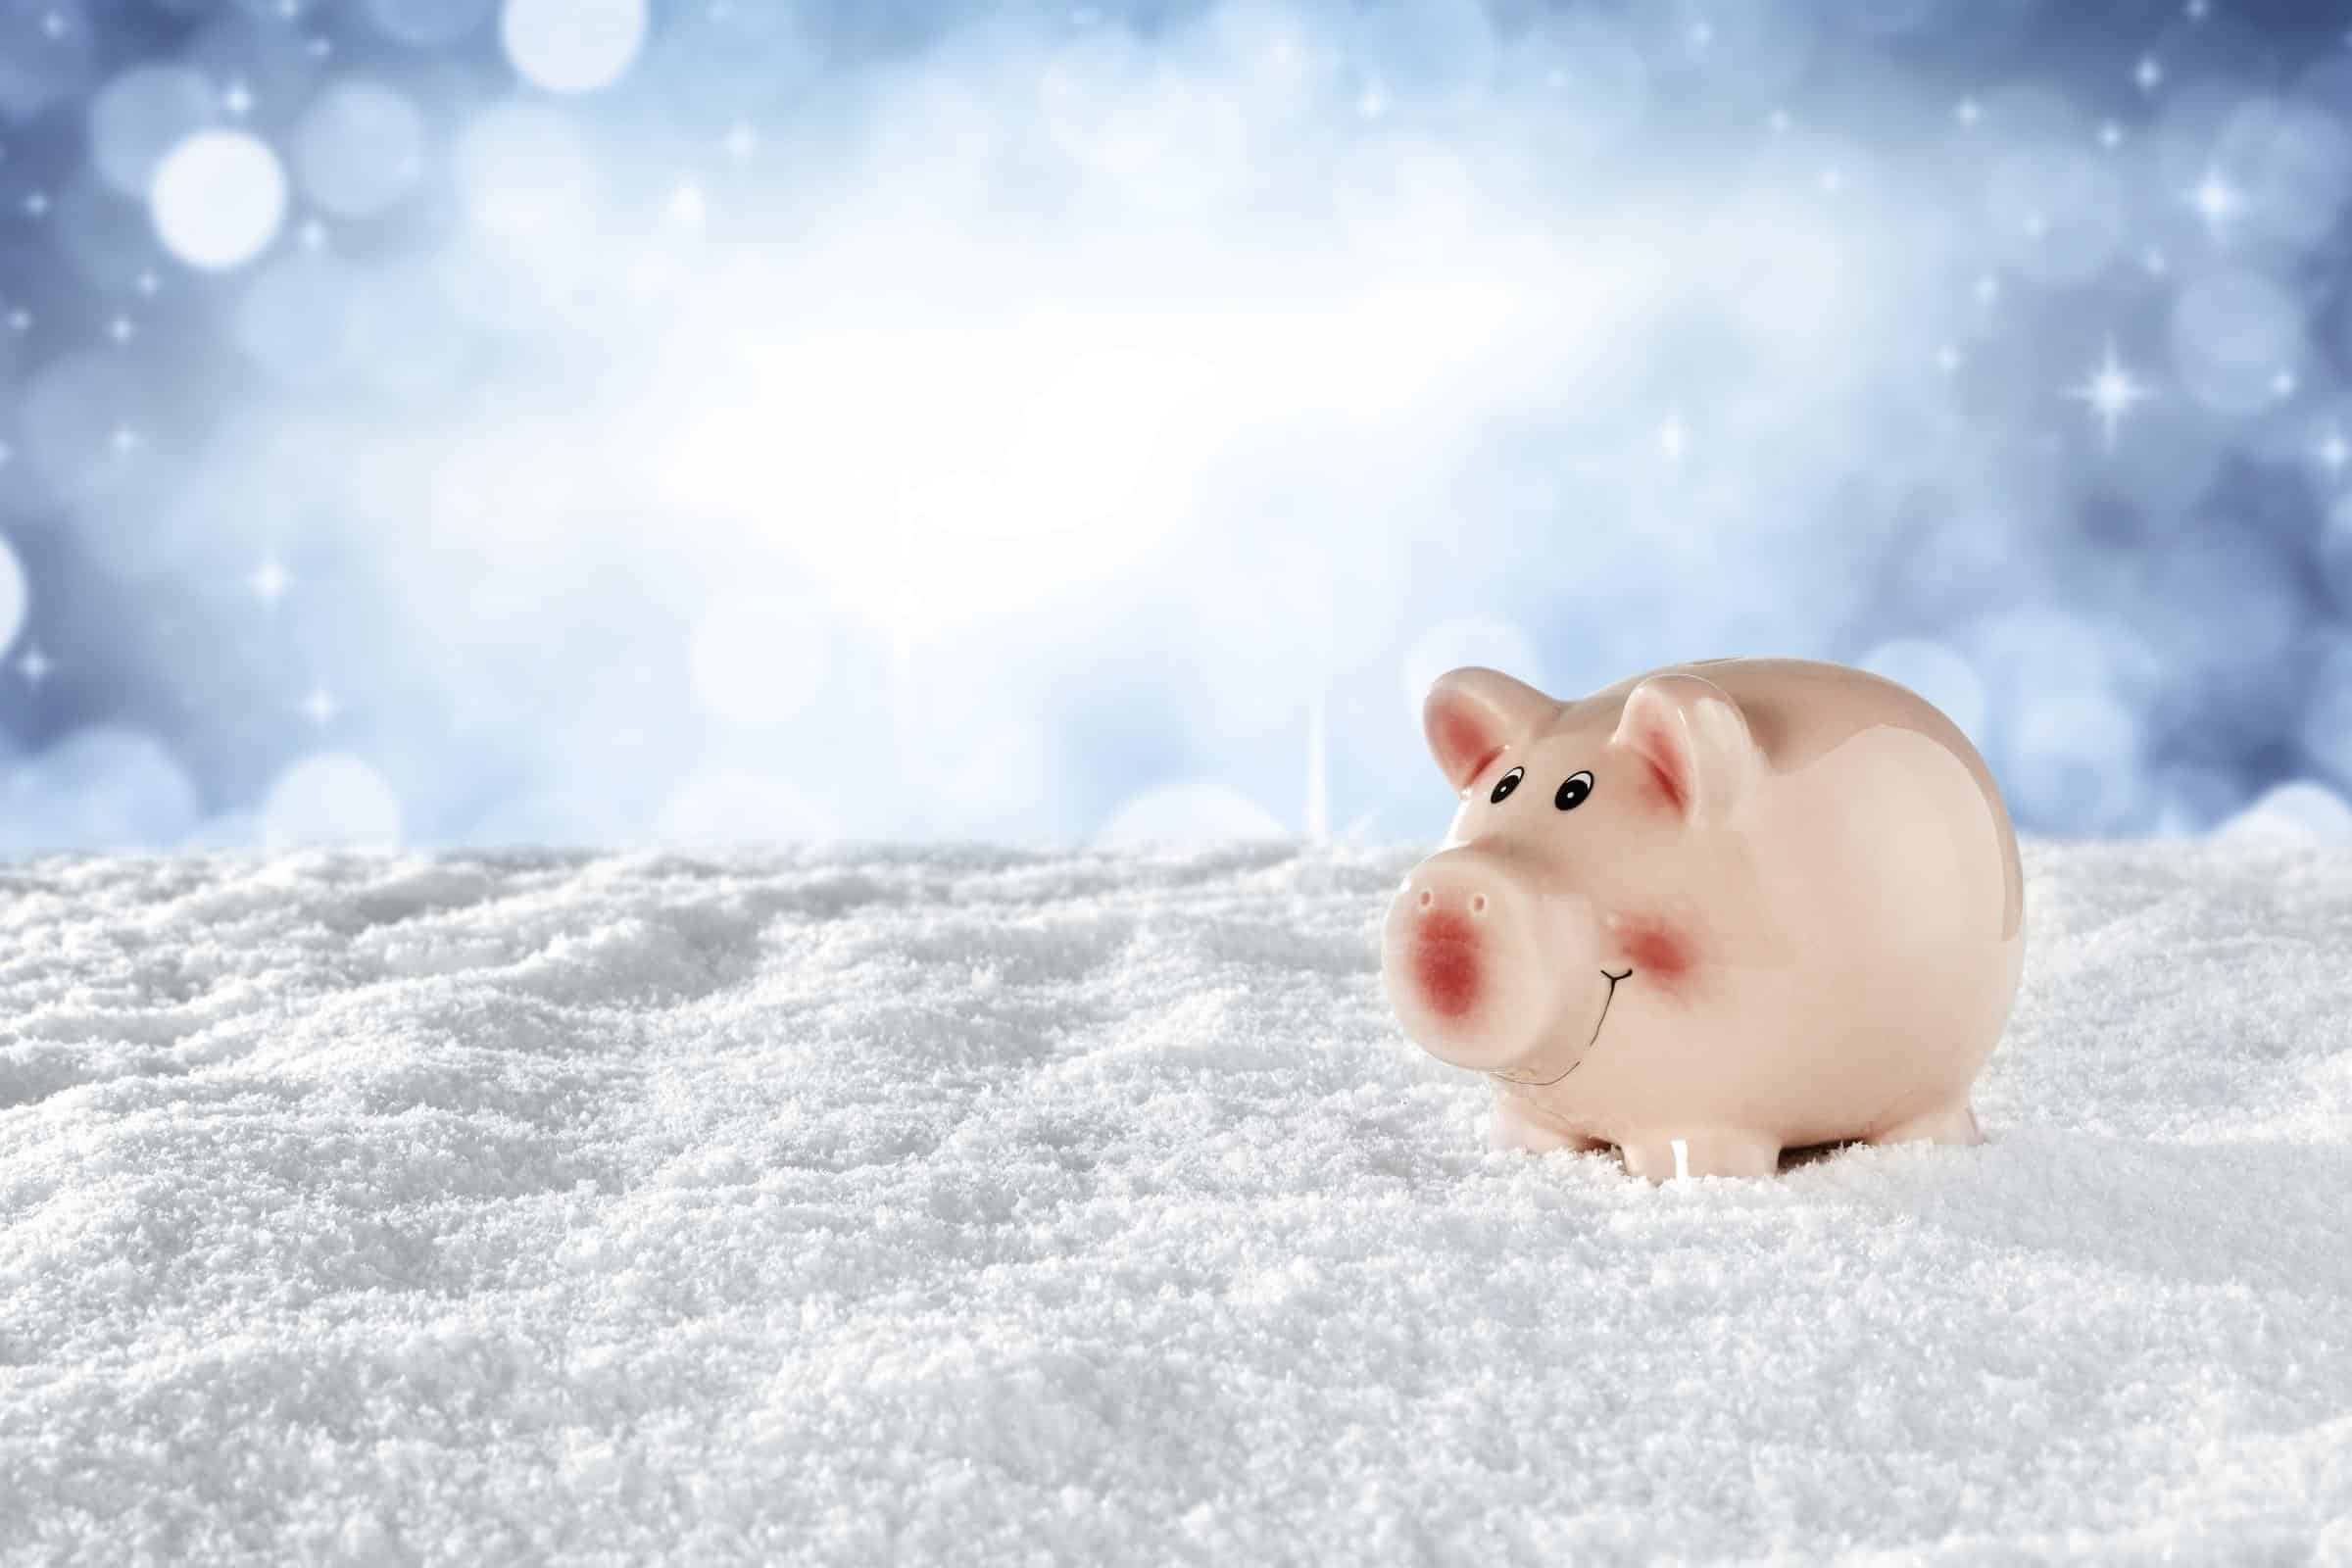 Piggy bank in snow